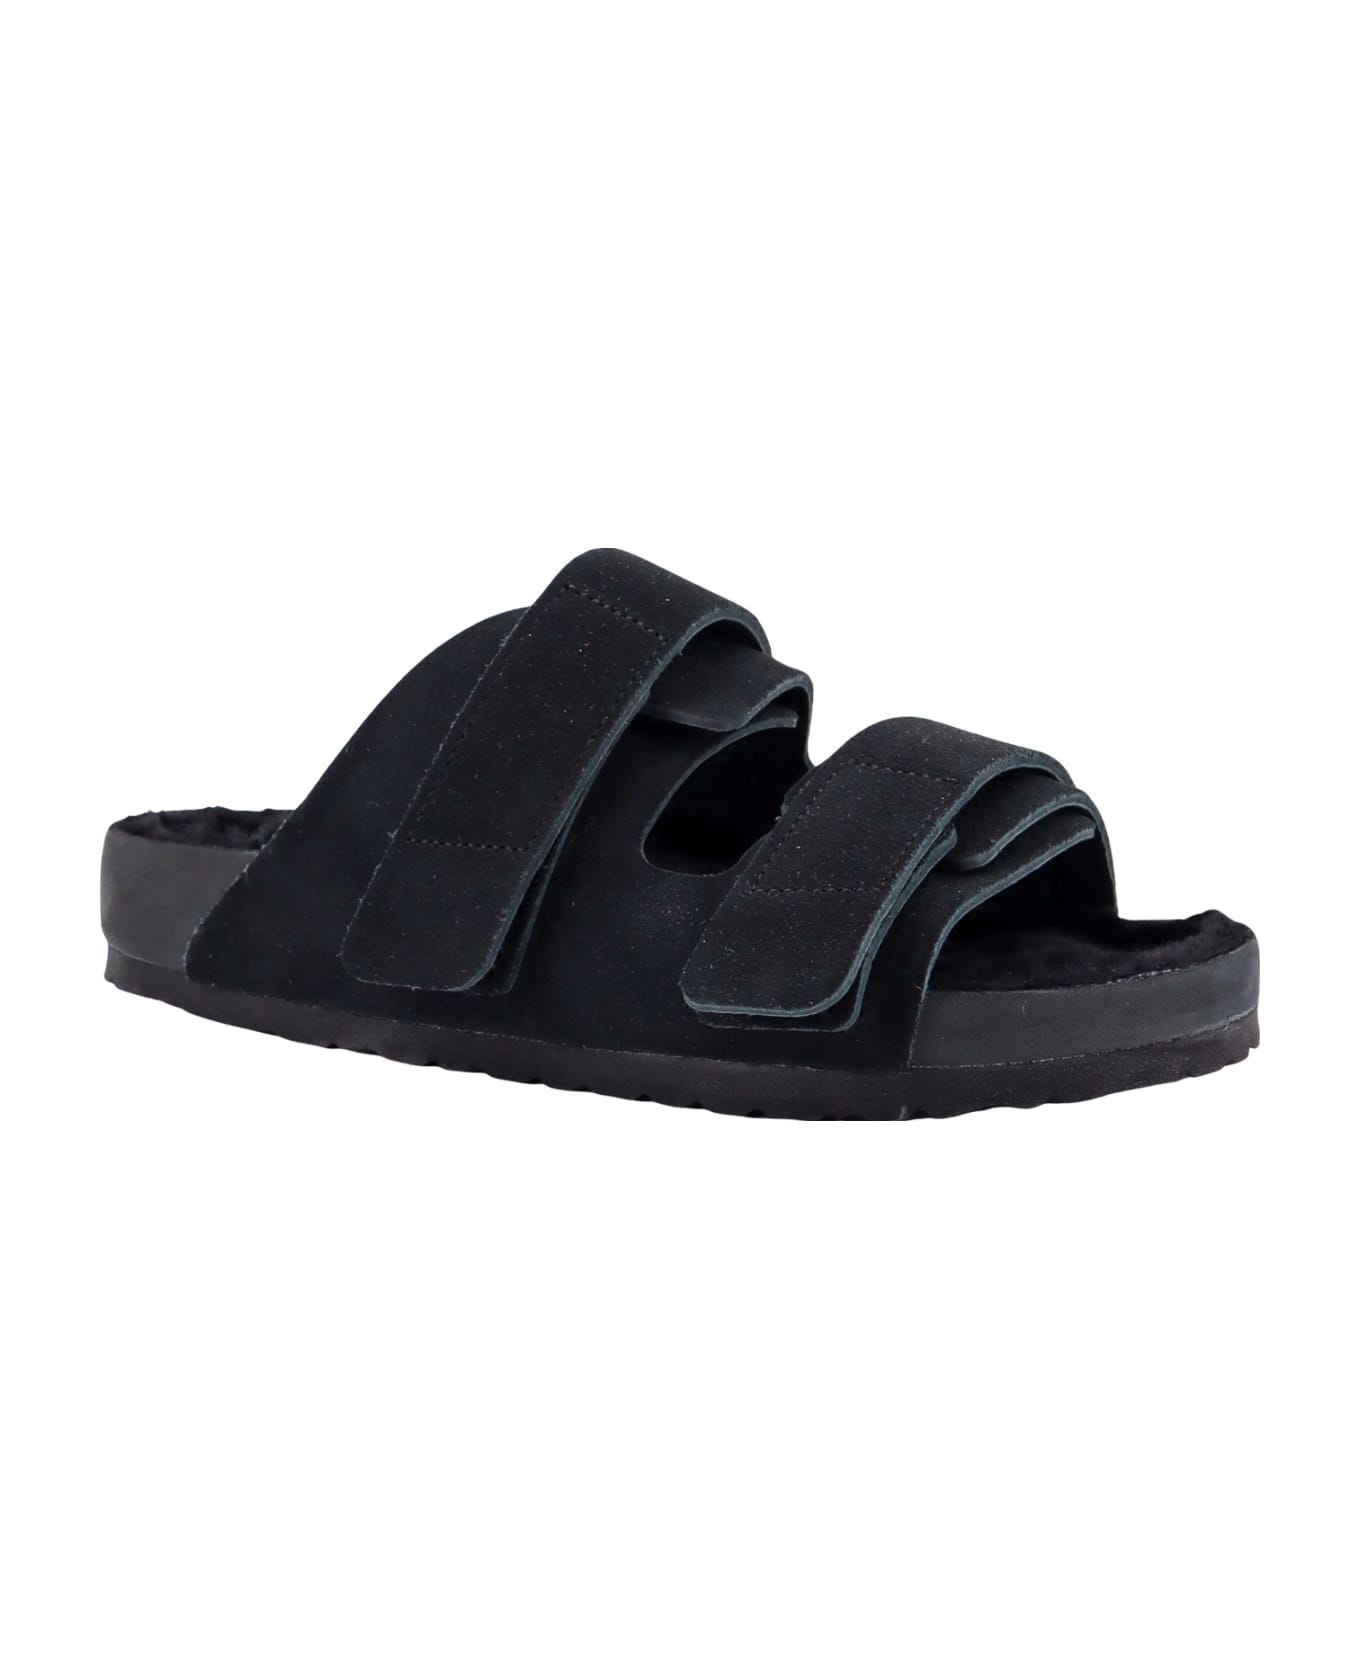 Birkenstock Uji Handstitch Sandals - Black